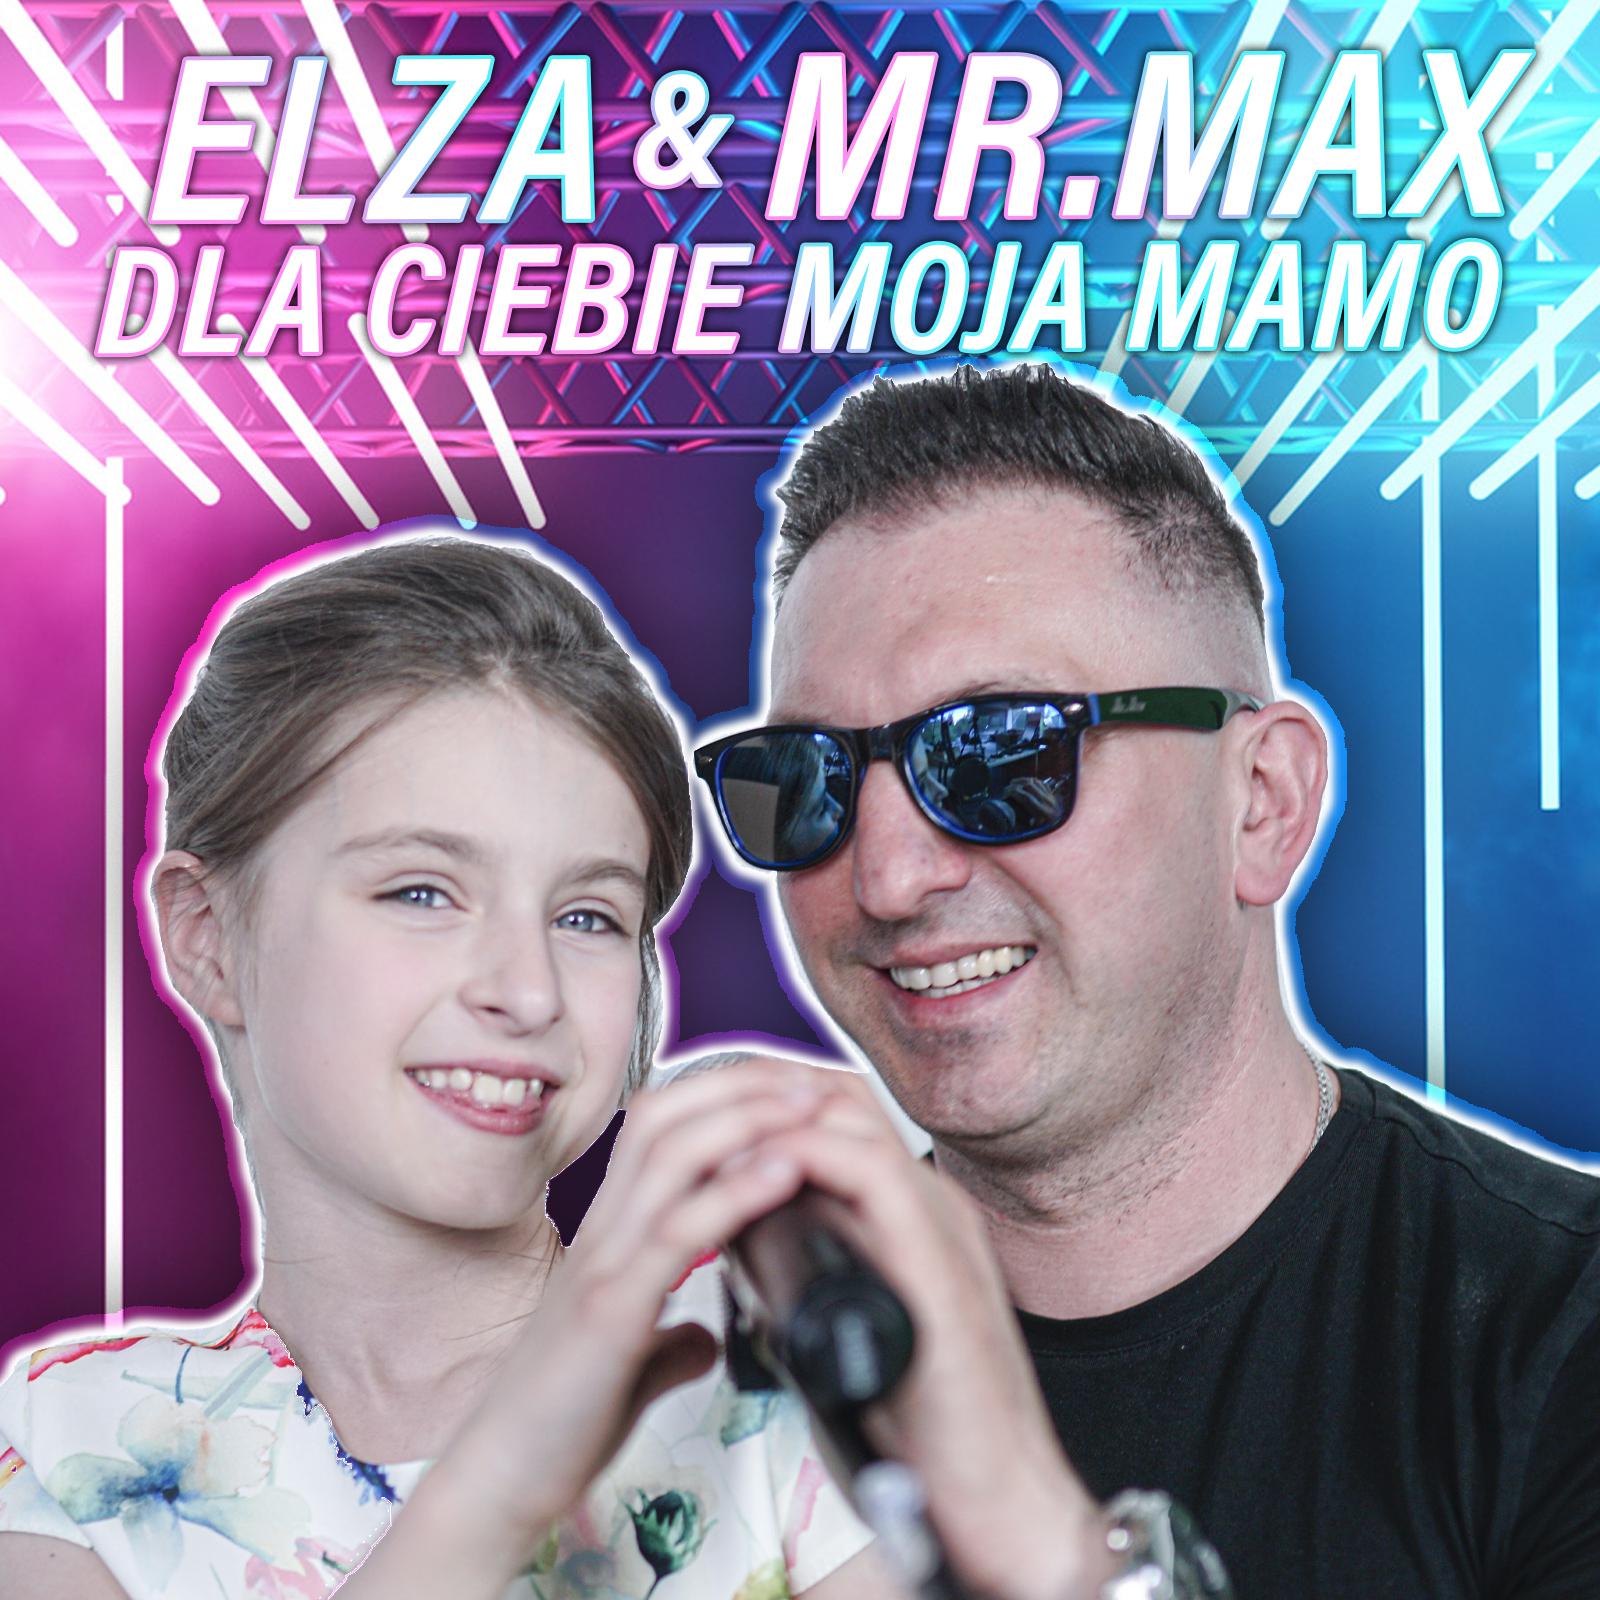 Elza - Dla ciebie moja mamo (Radio Edit)